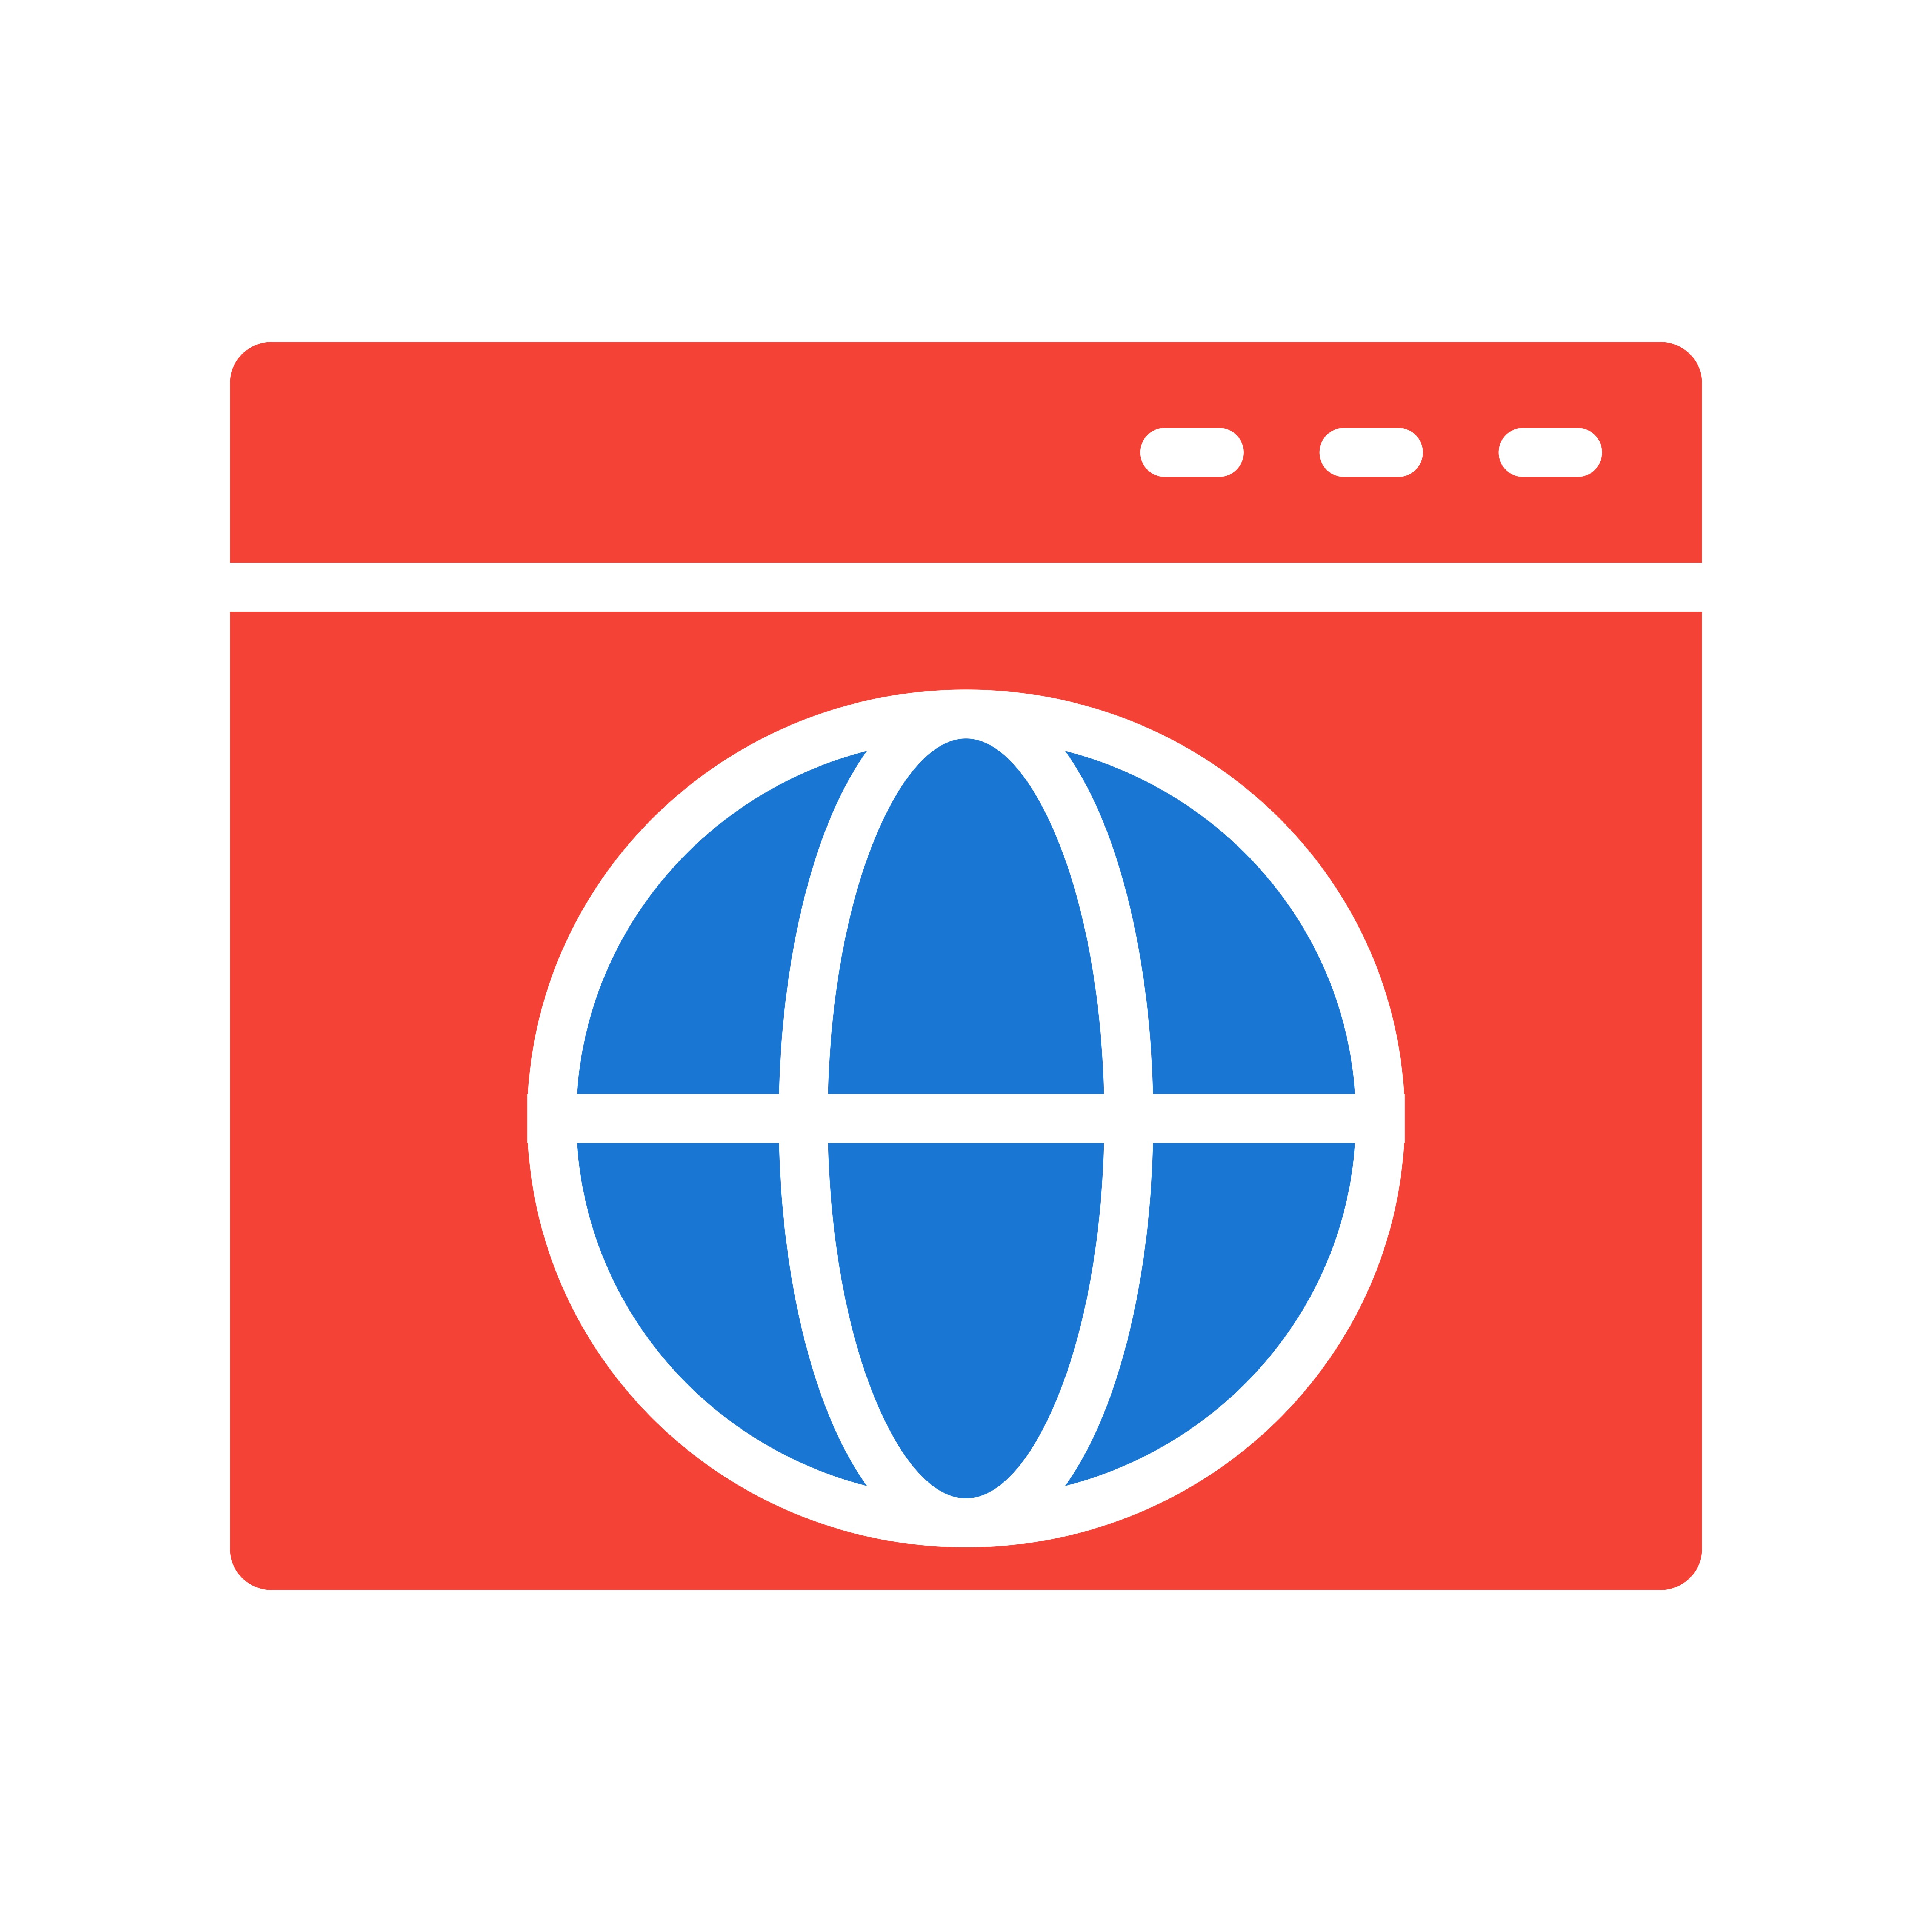  Browser  Icon  Design 499586 Download Free Vectors 